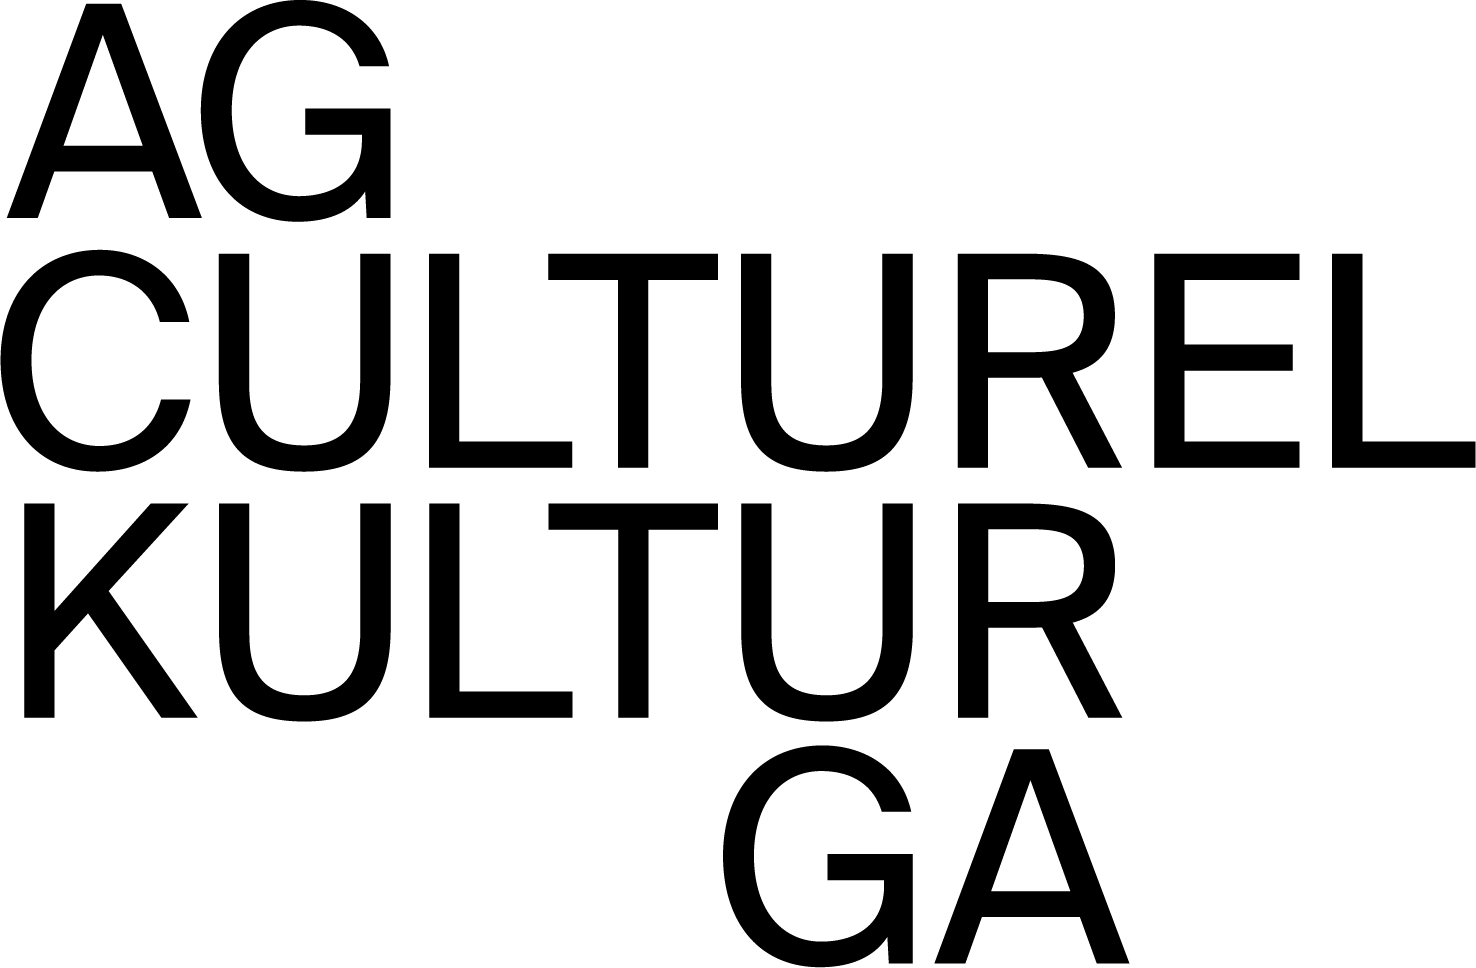 AG culturel